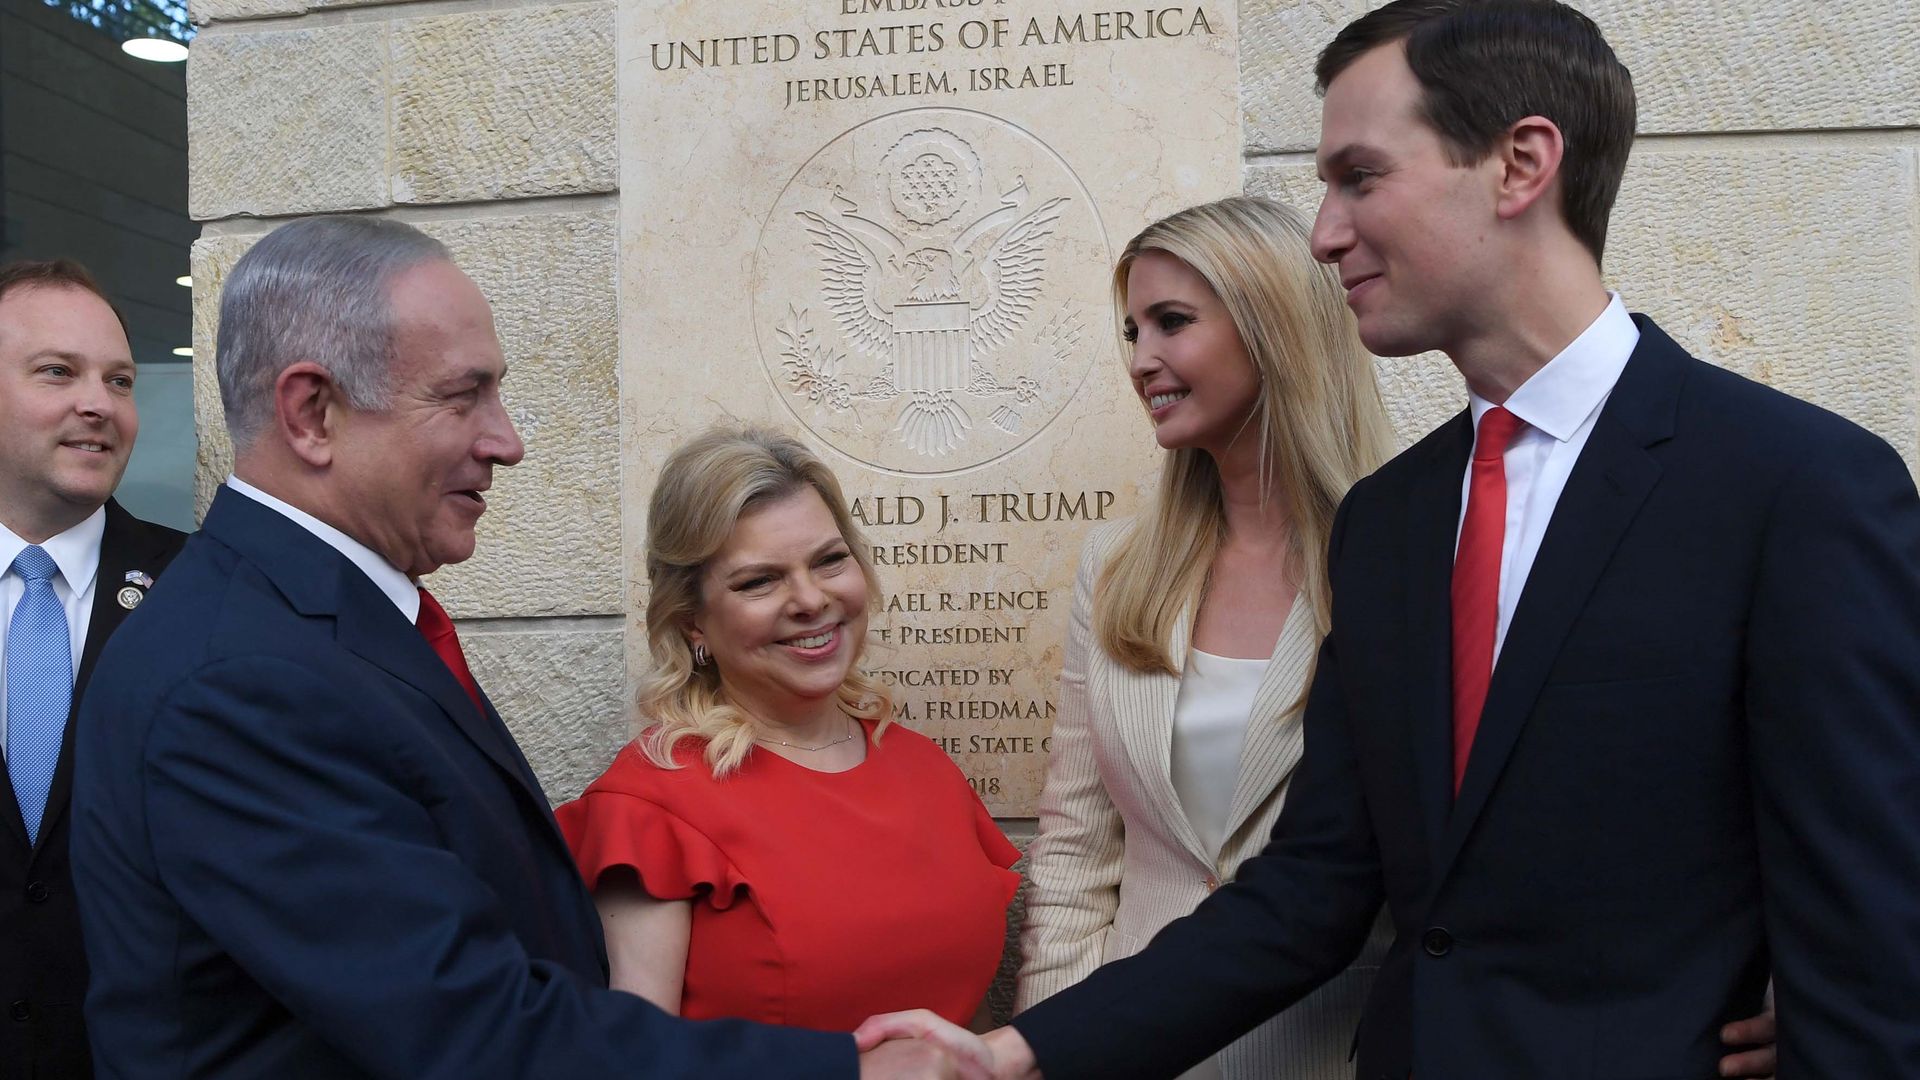 Jared Kushner and Benjamin Netanyahu shake hands, as their wives stand next to them. 